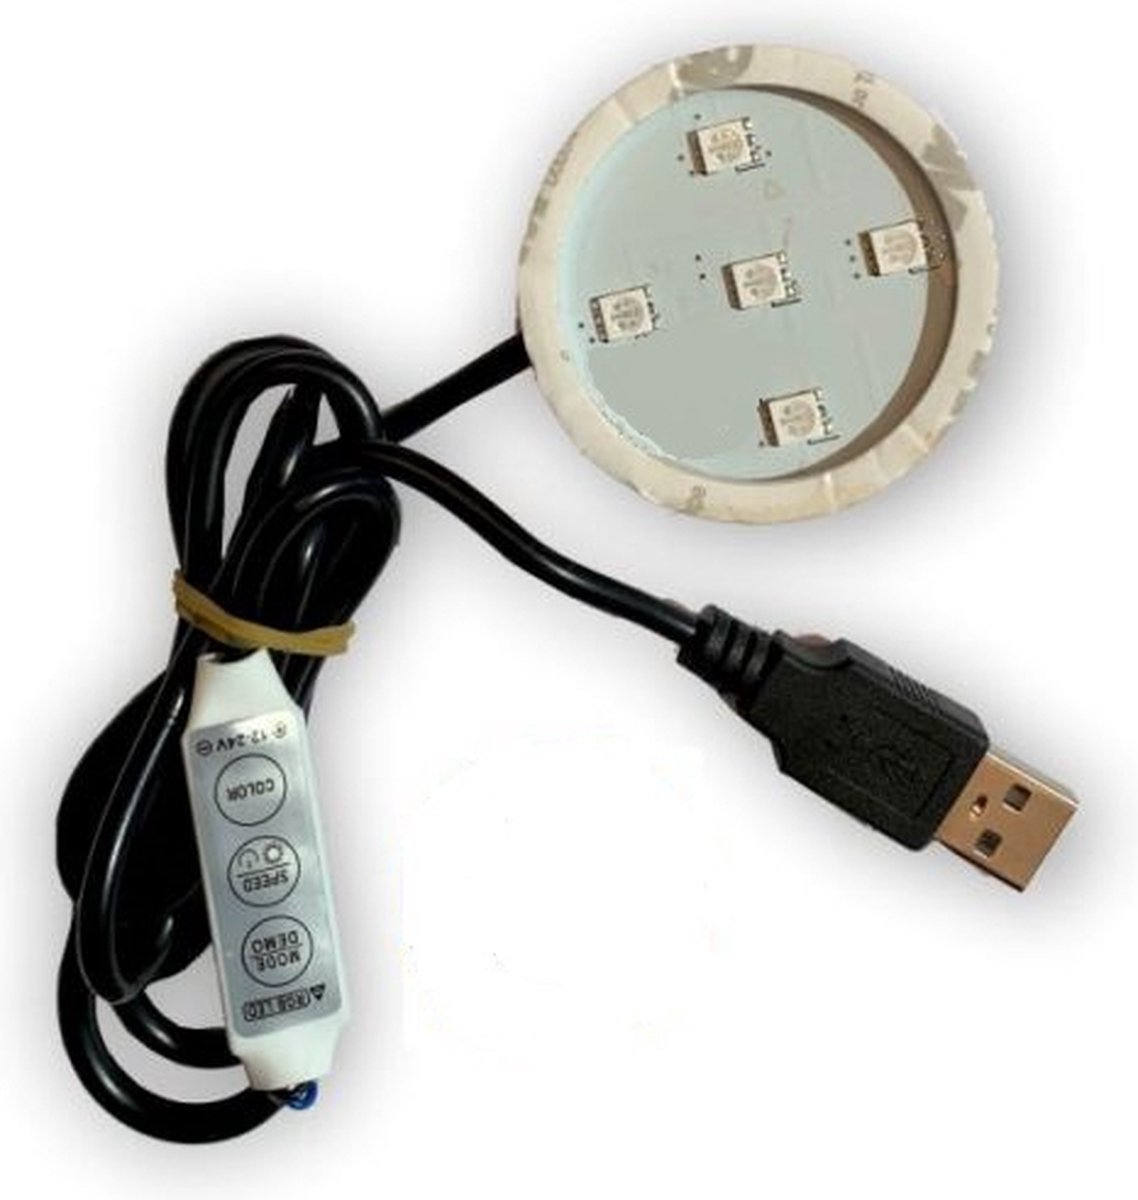 Poppy led verlichting 12/24V met USB-aansluiting